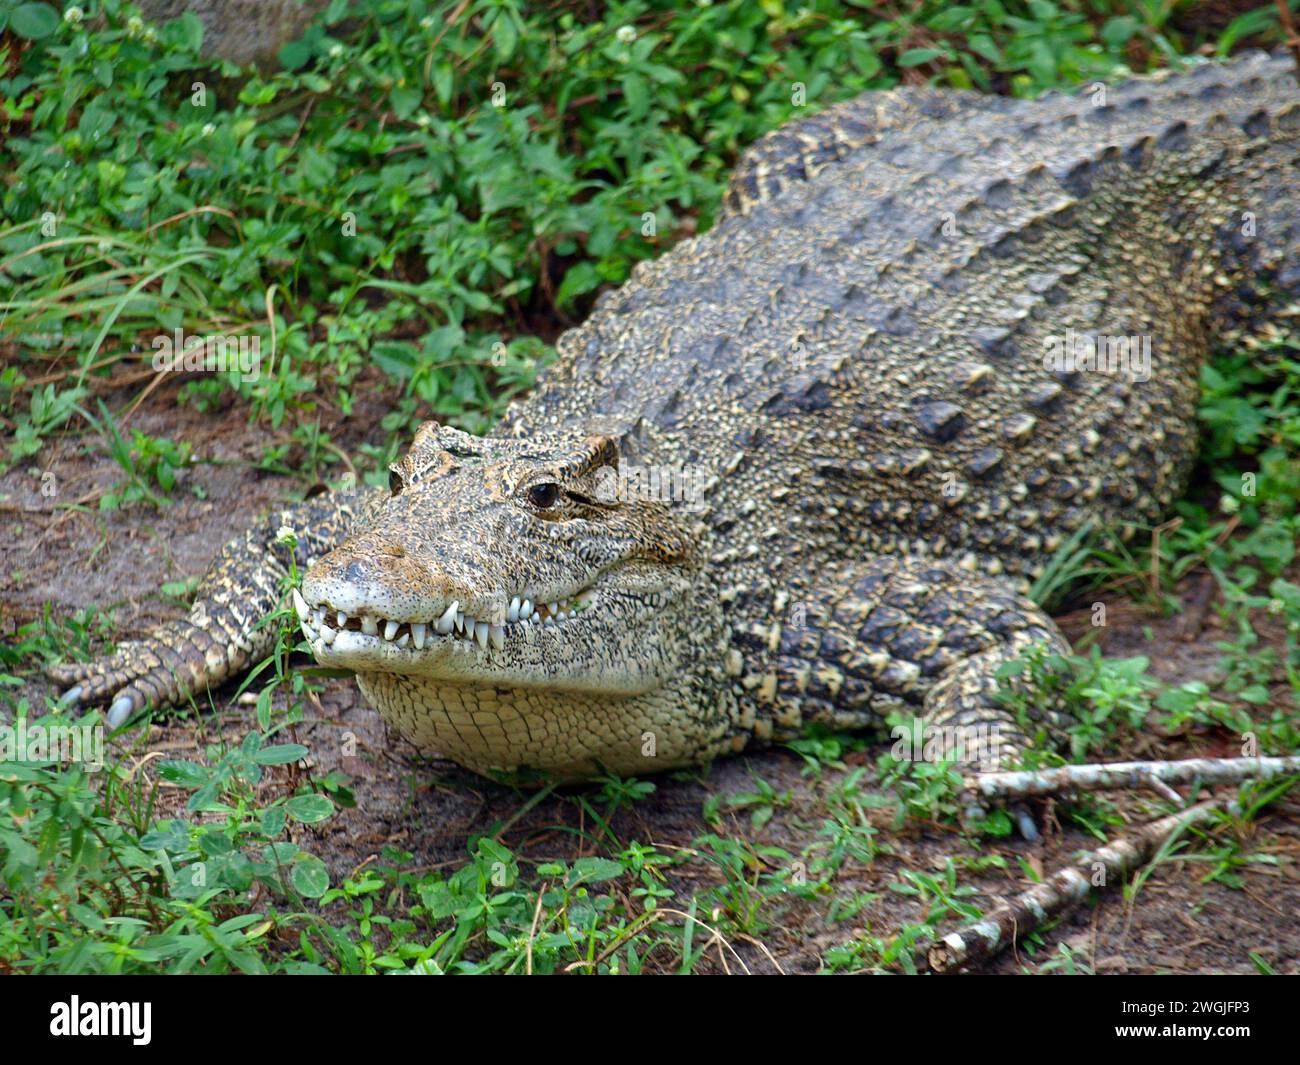 The Cuban crocodile (Crocodylus rhombifer). This especies is endemic to the island of Cuba. Stock Photo